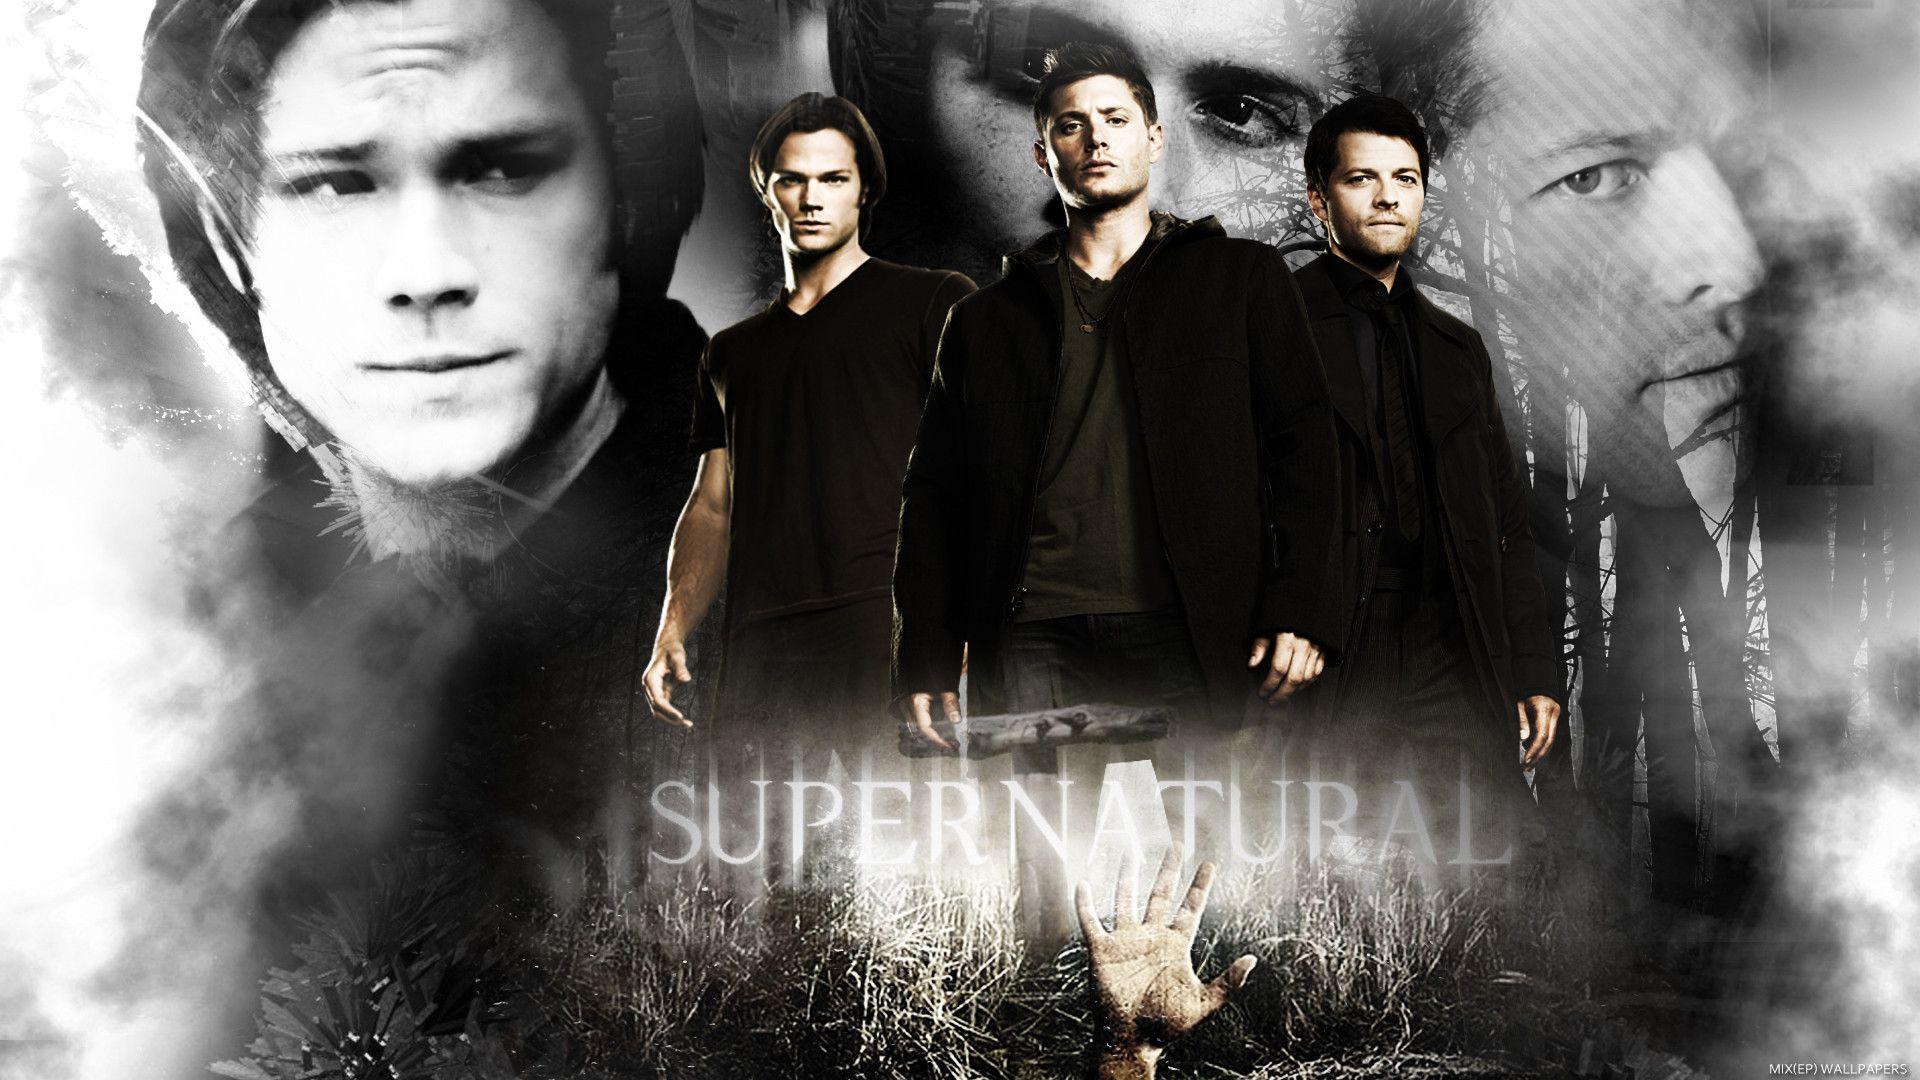 Supernatural Wallpaper For Facebook cover TV Series